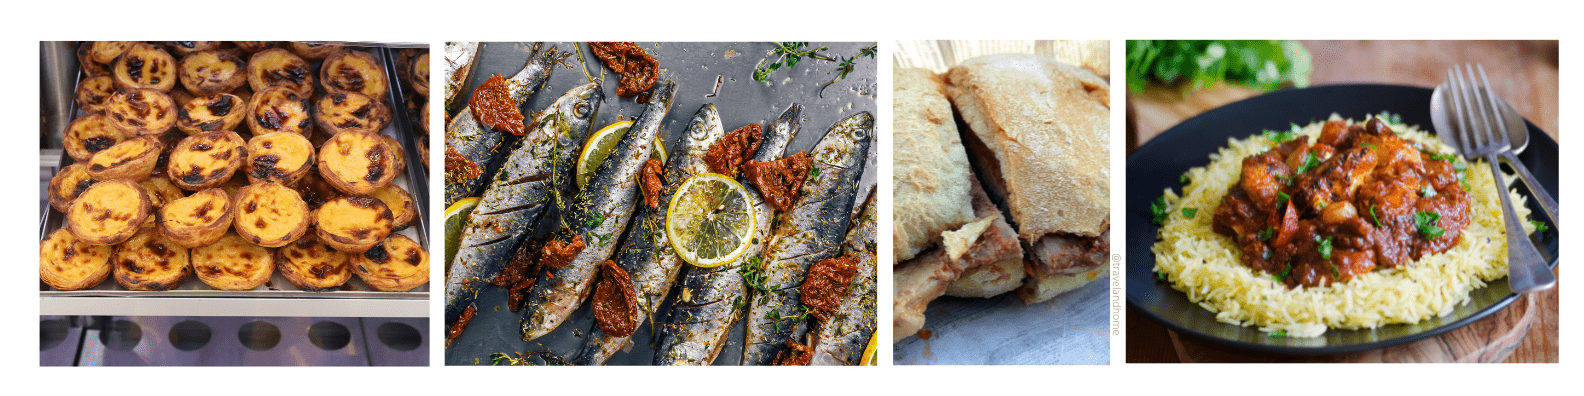 Portuguese cuisine Pasteis de Nata sardines bifana sandwich piri piri chicken min